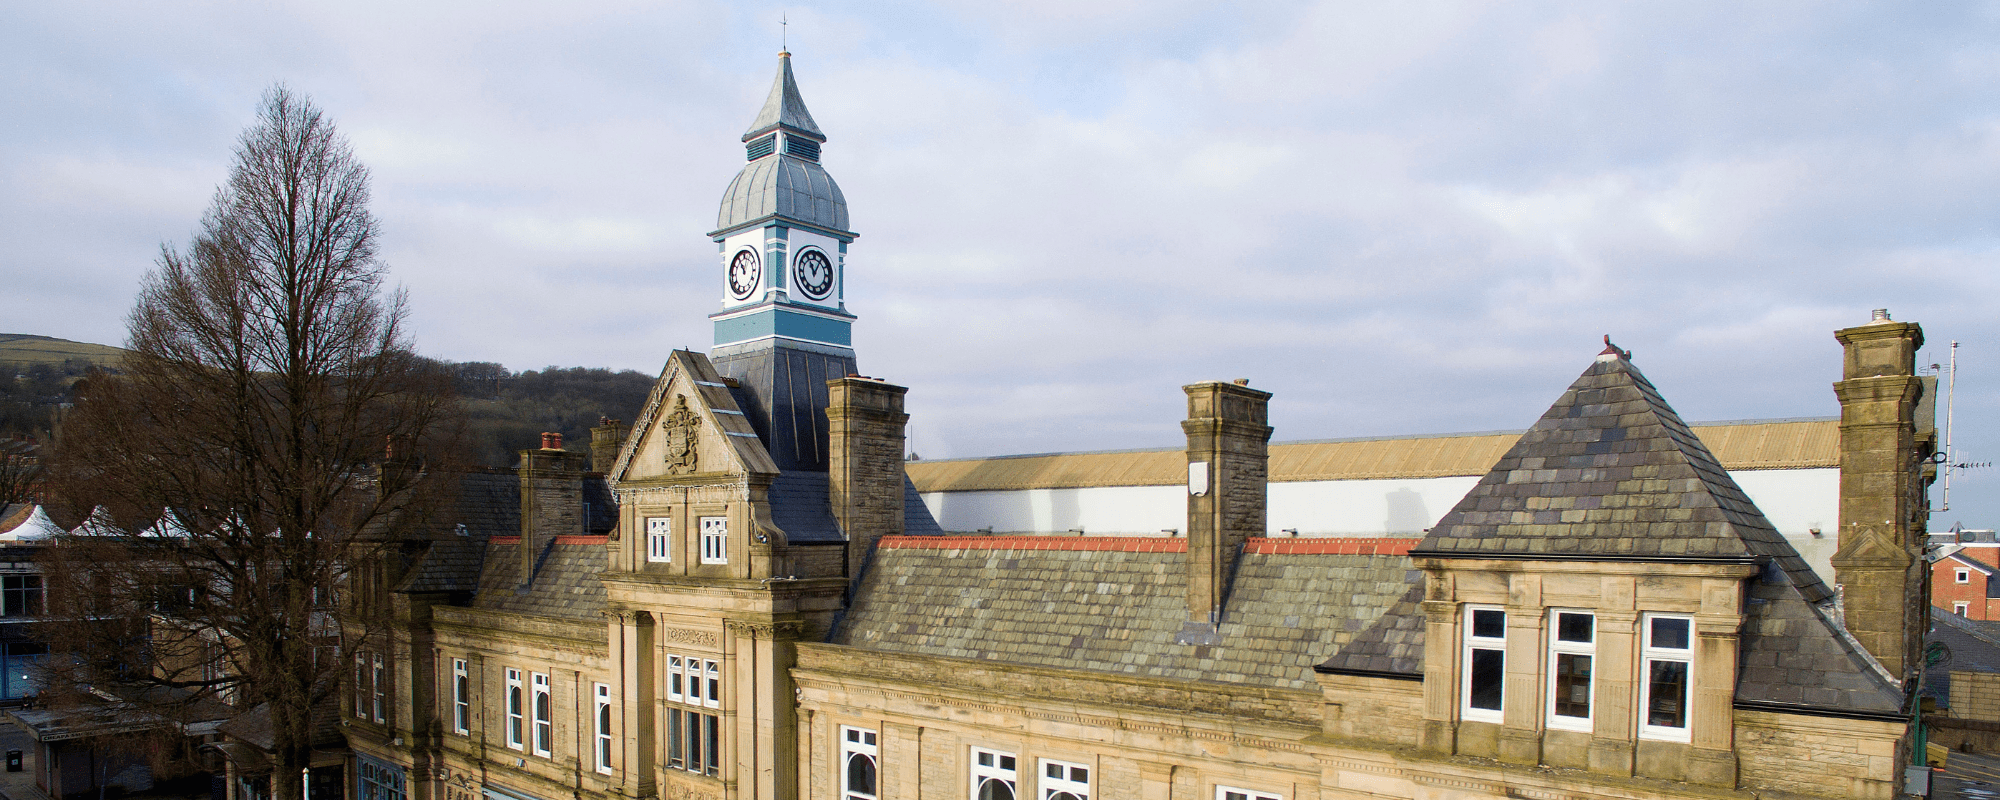 Darwen Town Hall Roof Image